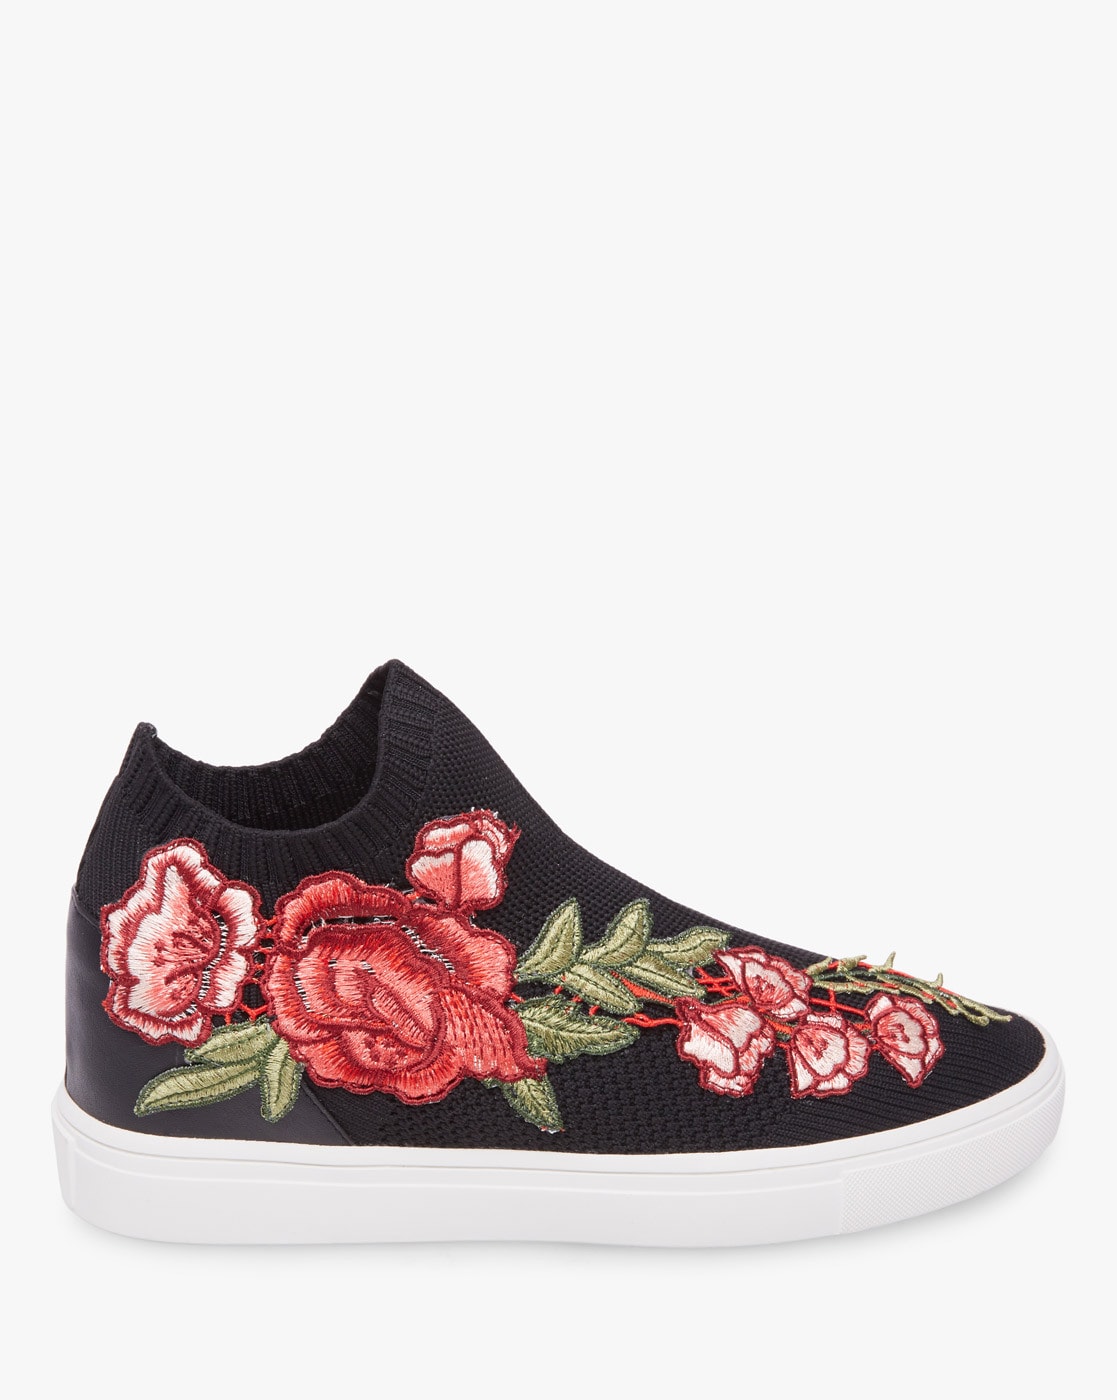 steve madden floral sneakers